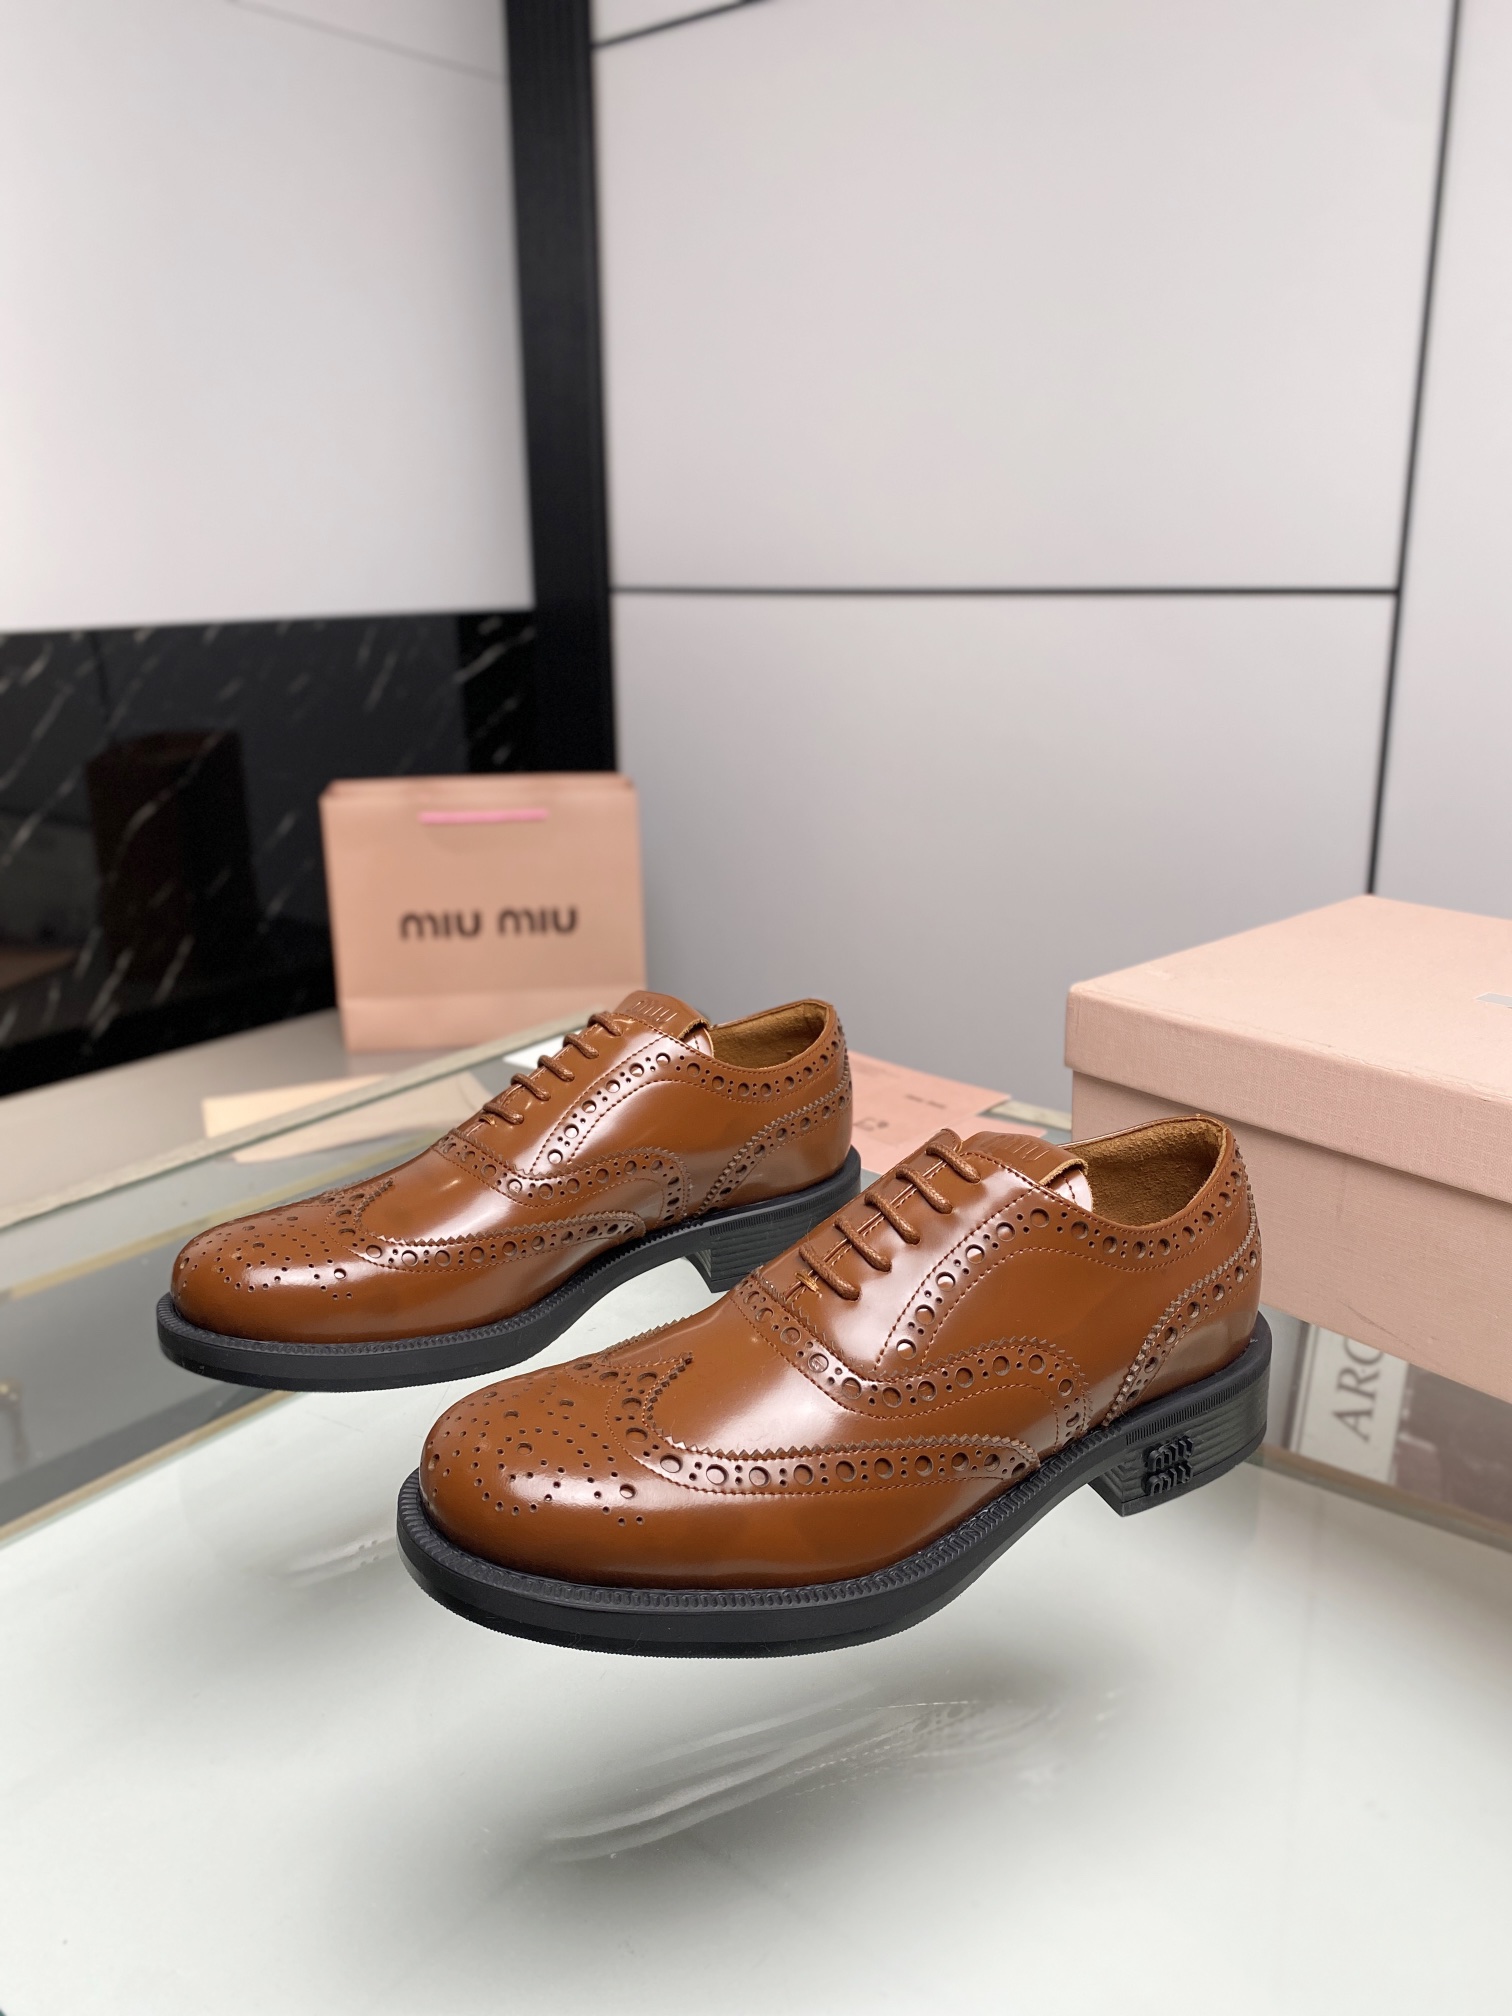 miumiu の スニーカーコピー 本革 ビジネス 革靴 軽量 歩きやすい 紳士靴 通気 シューズ  人気 ブラウン_3